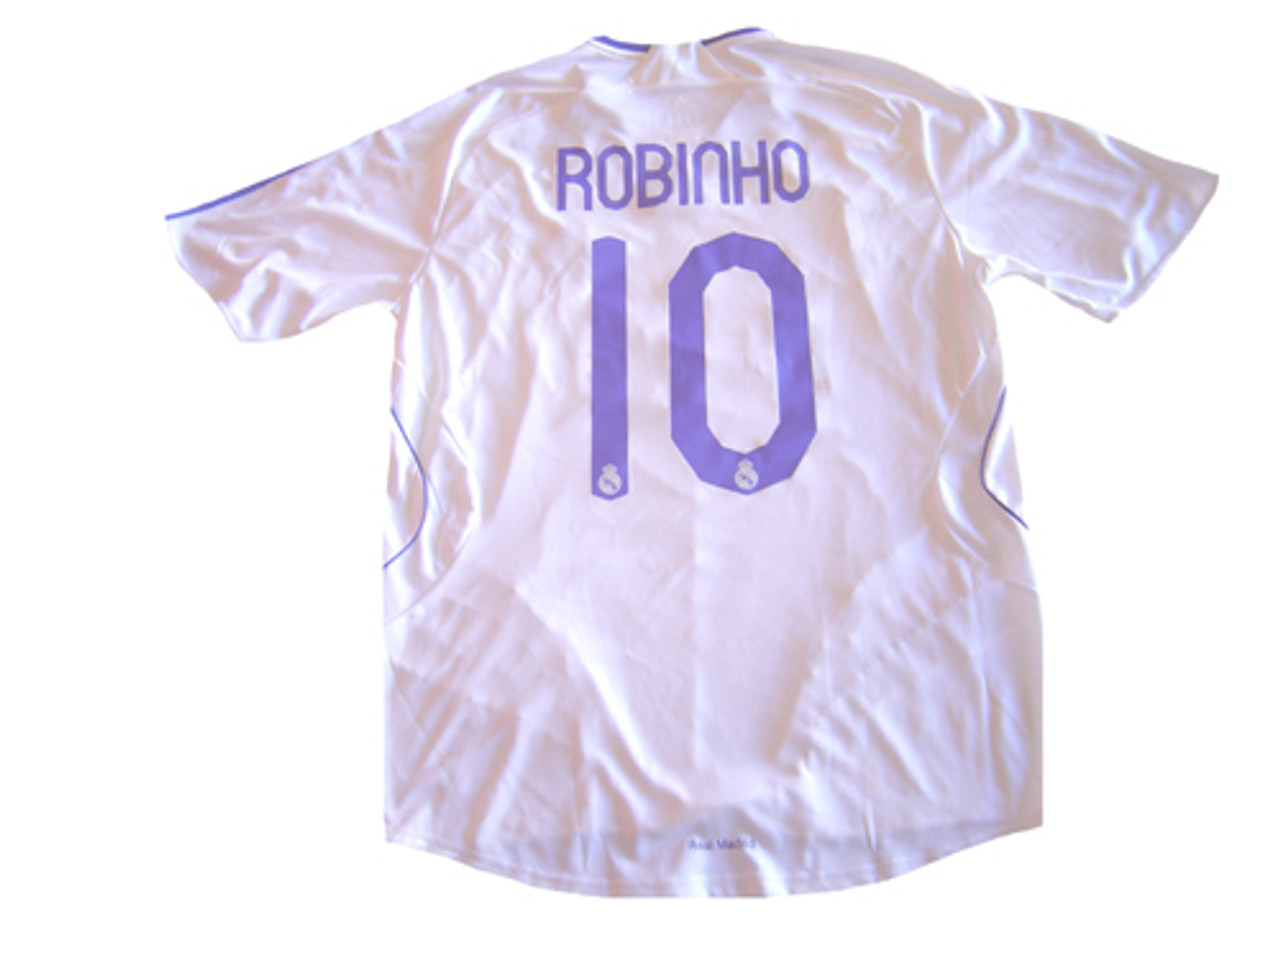 robinho jersey number